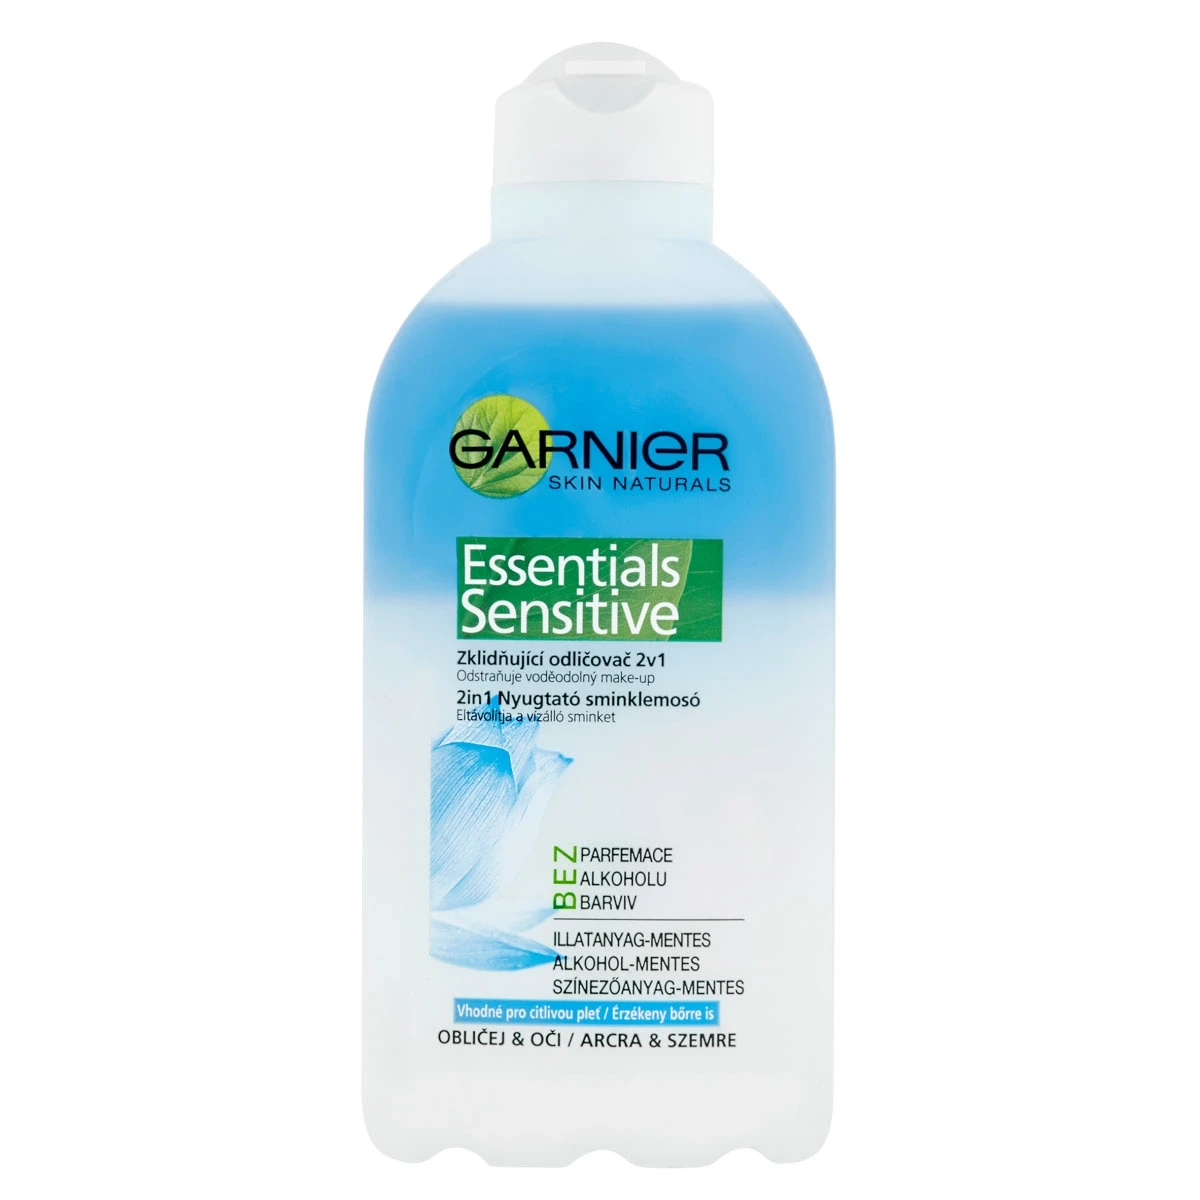 Garnier Skin Naturals Essentials Sensitive 2in1 nyugtató sminklemosó 200 ml